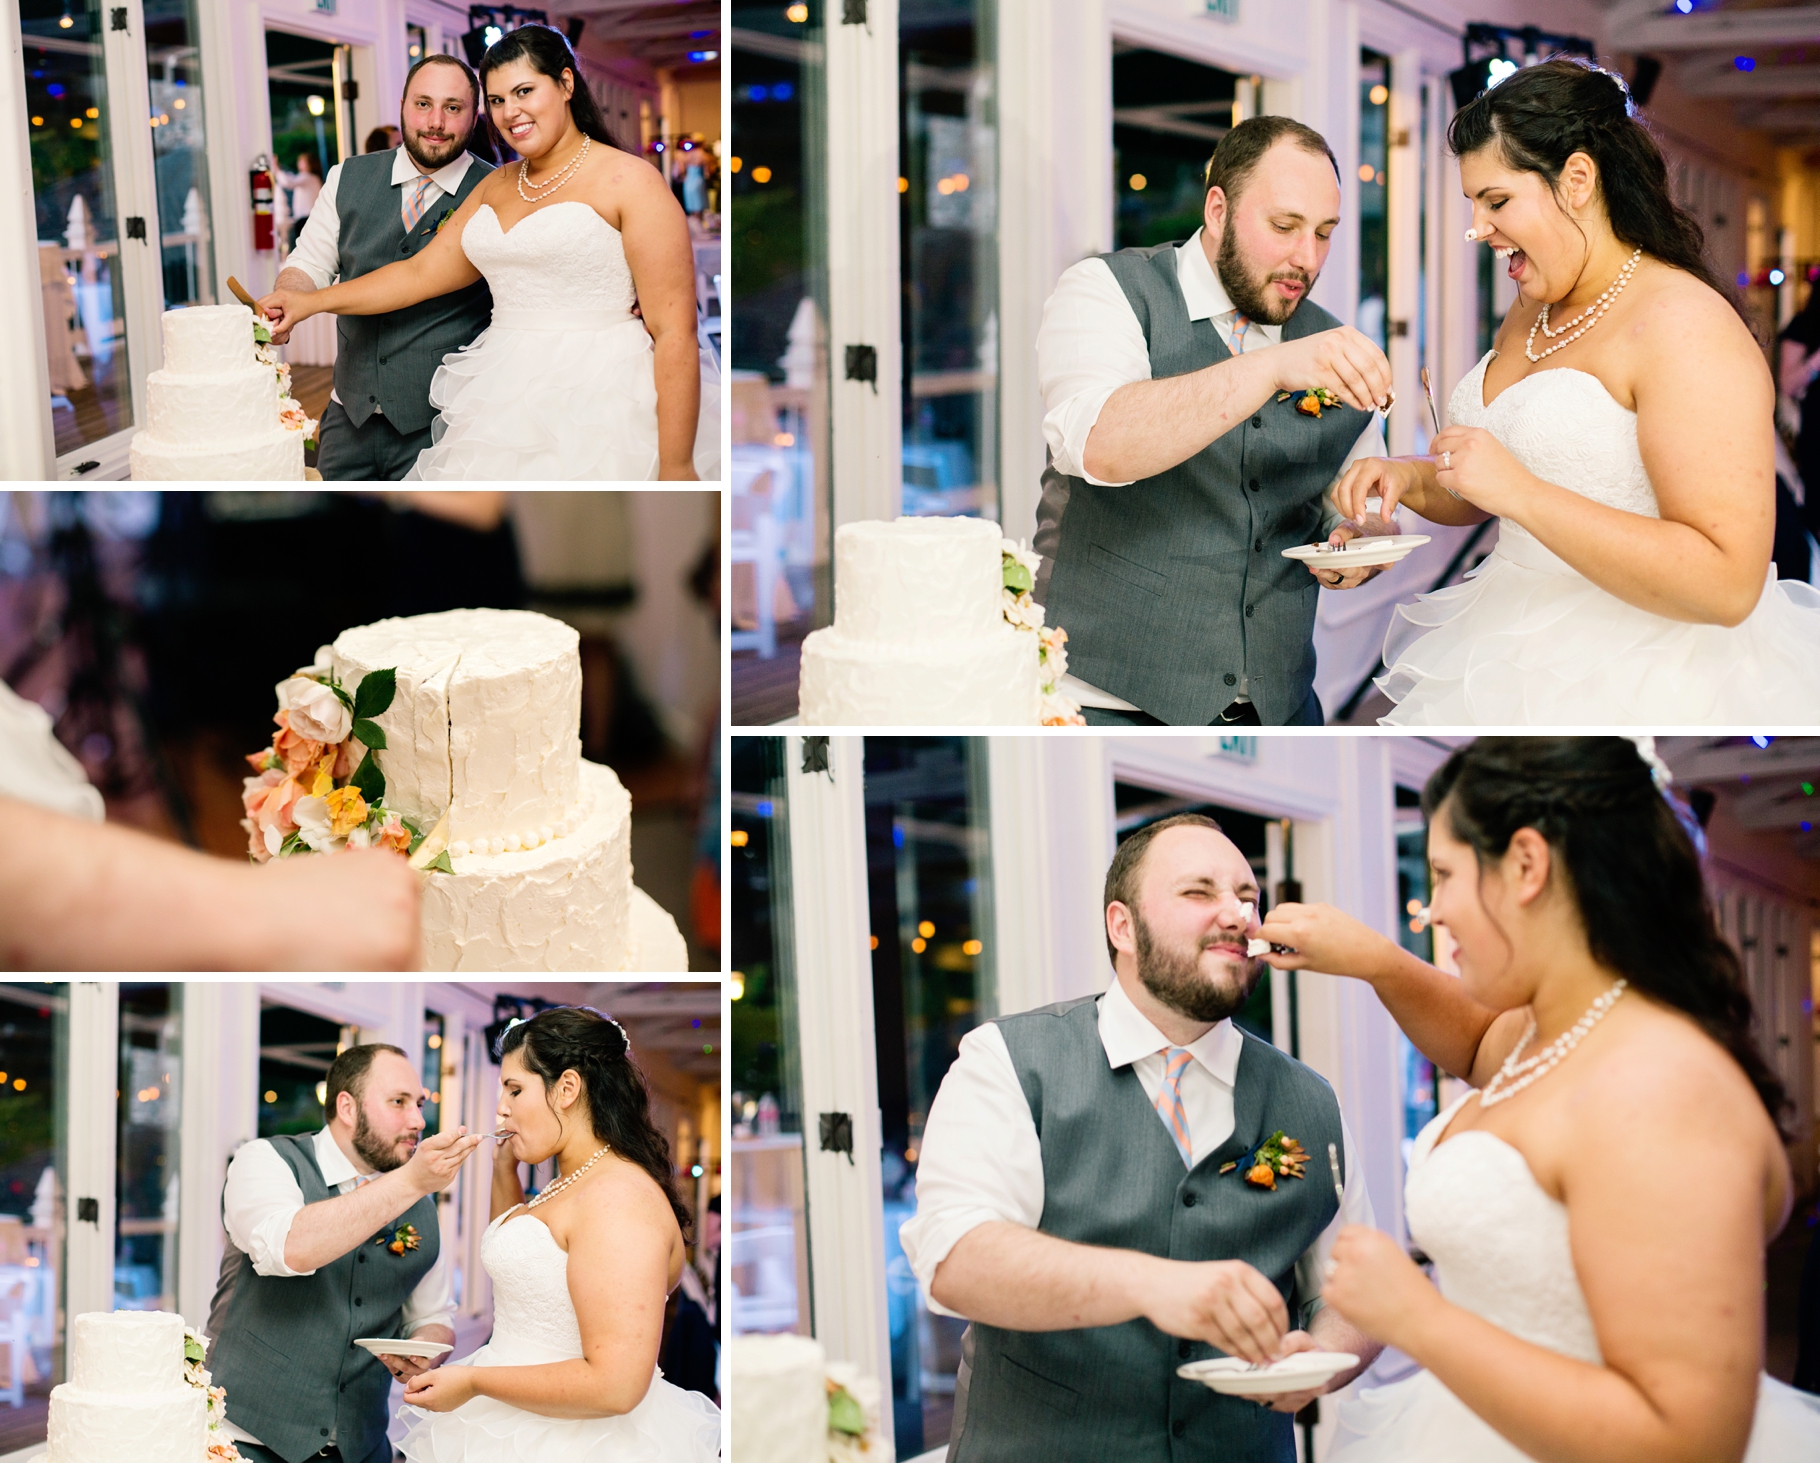 45-Reception-Cake-Cutting-Bride-Groom-San-Jaun-Island-Roche-Harbor-Resort-Wedding-Photographer-Northwest-Seattle-Photography-by-Betty-Elaine